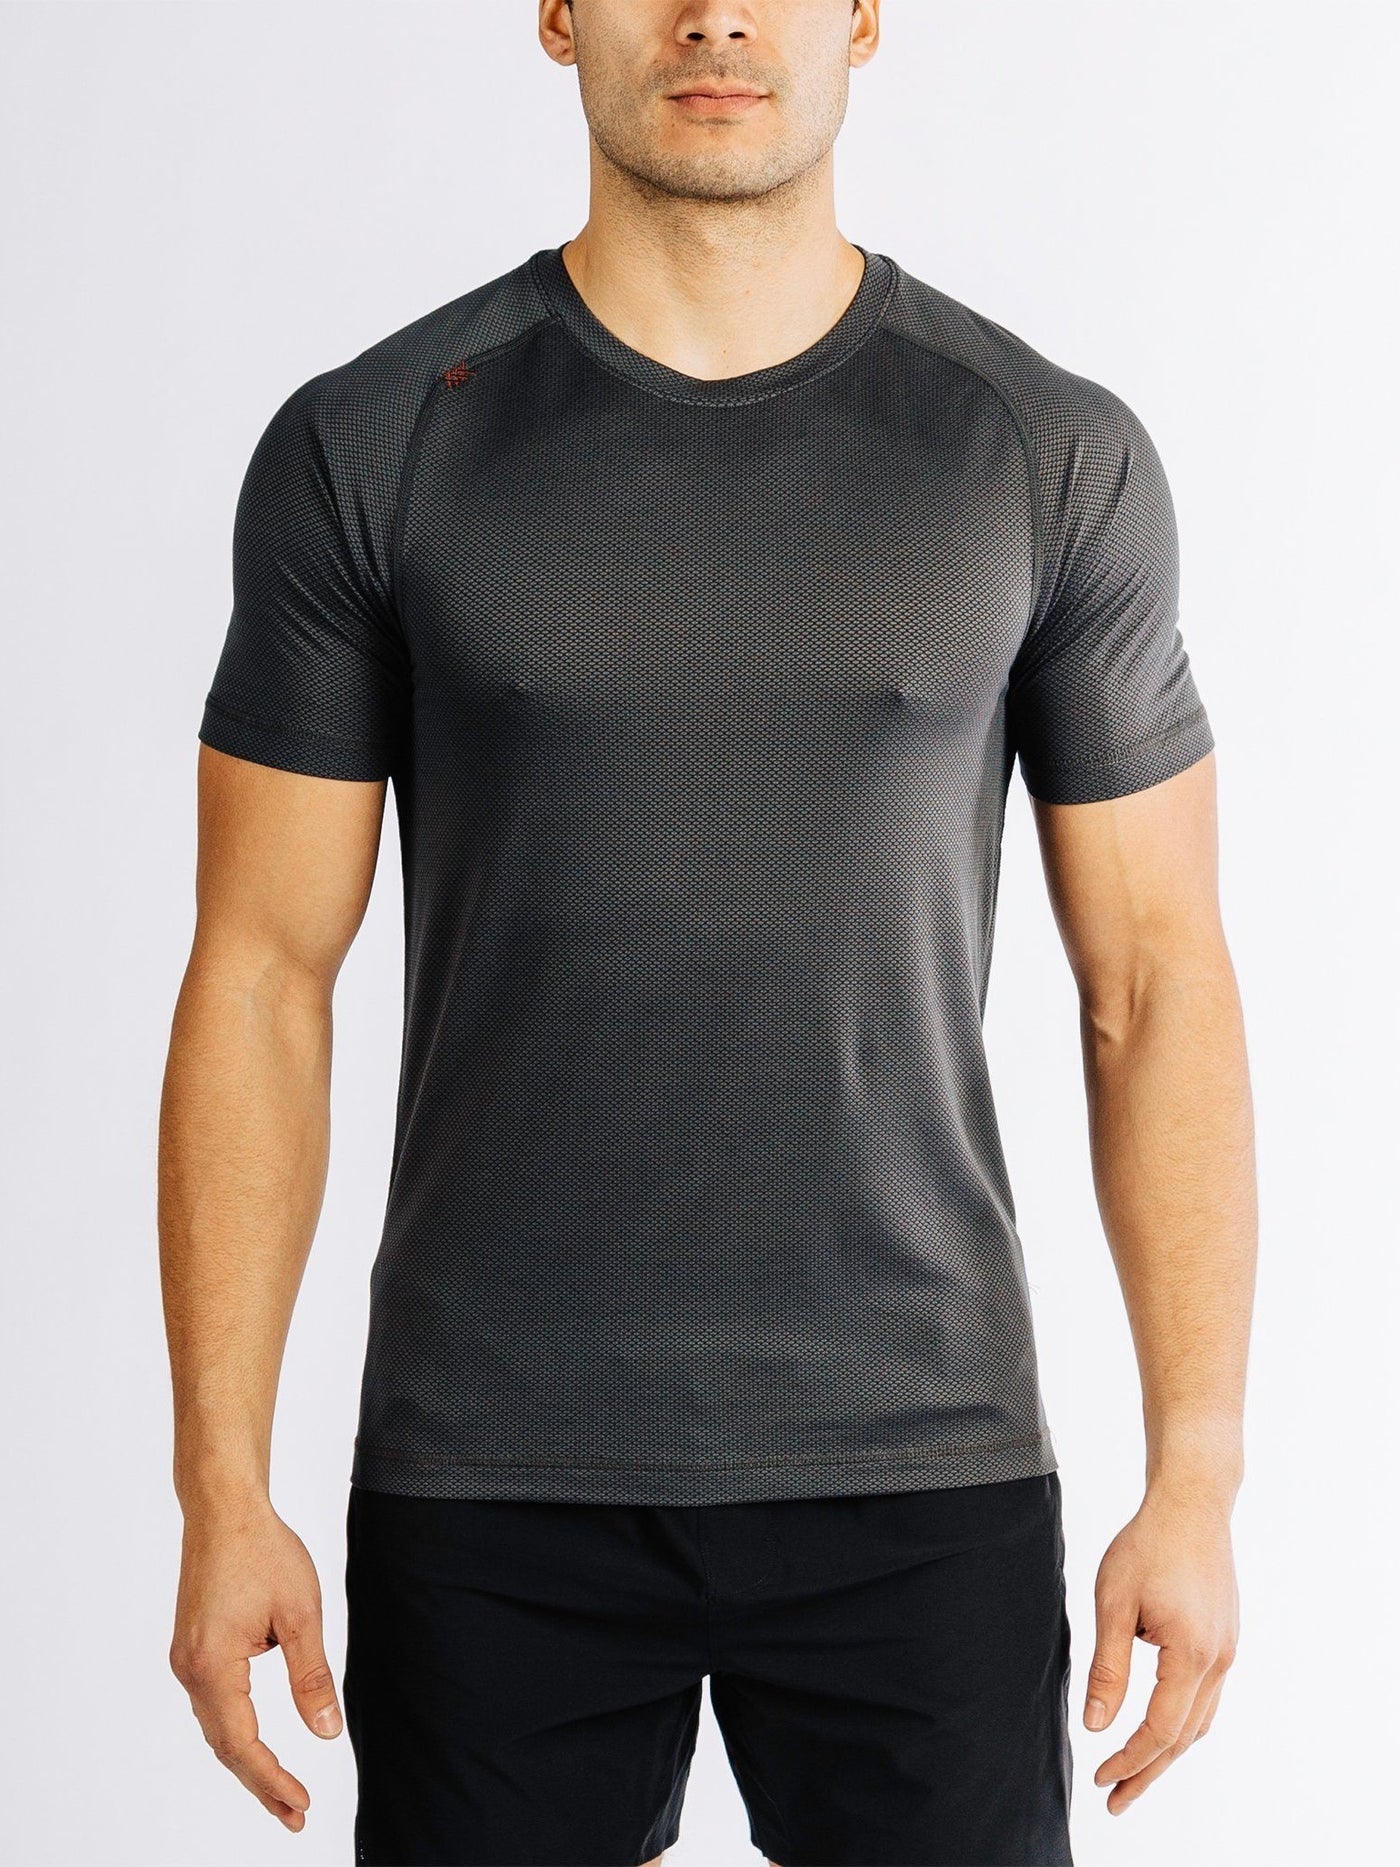 Glacier Delta Gym T-Shirt DryFit Workout Shortsleeve Tee Black - Activemen Clothing